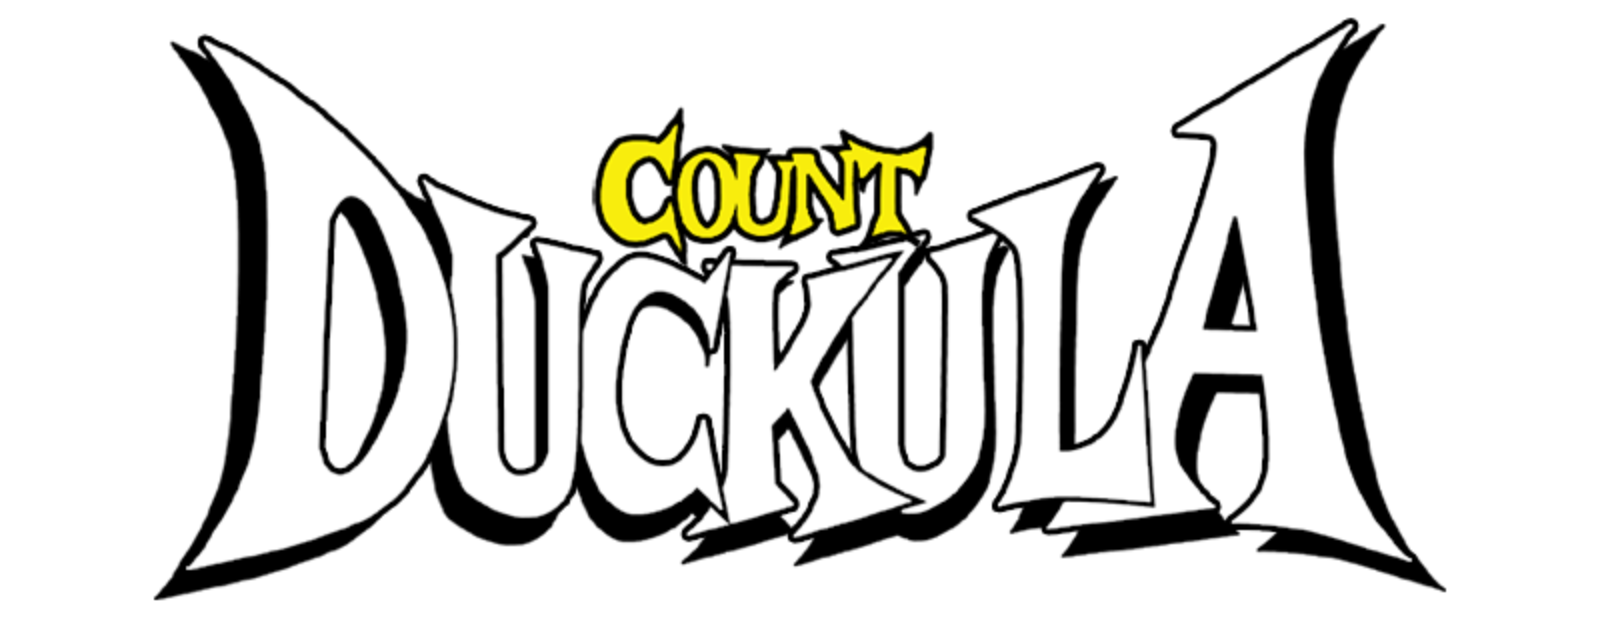 Count Duckula 